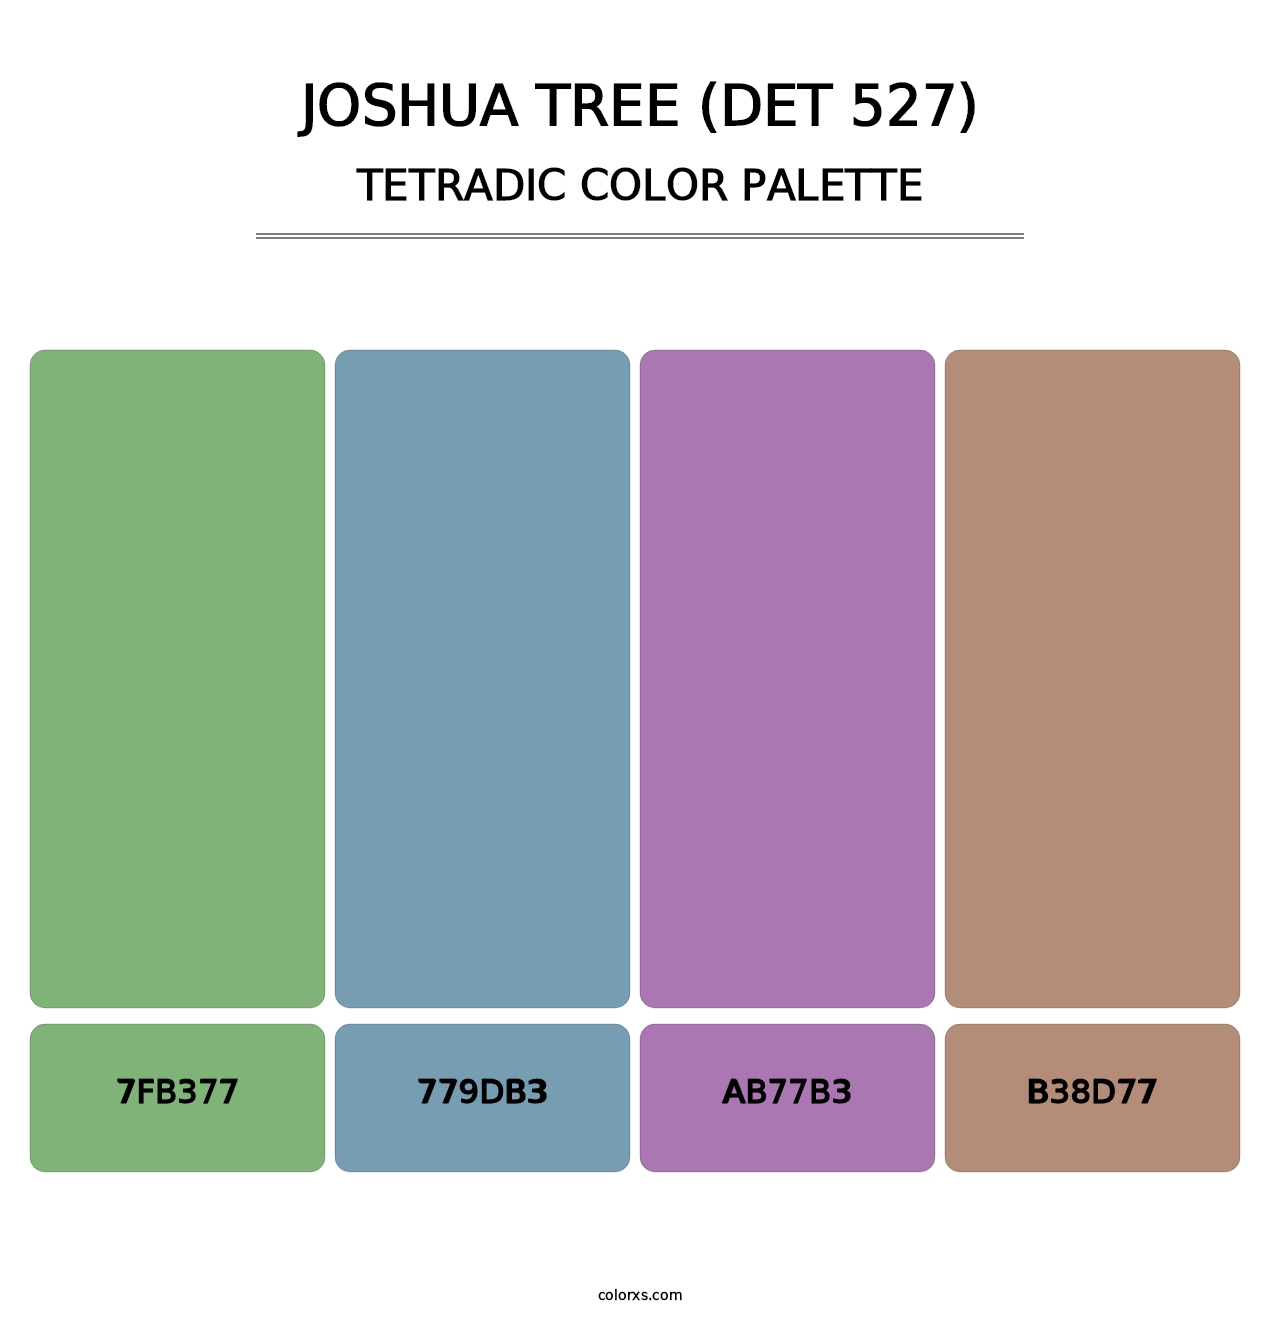 Joshua Tree (DET 527) - Tetradic Color Palette